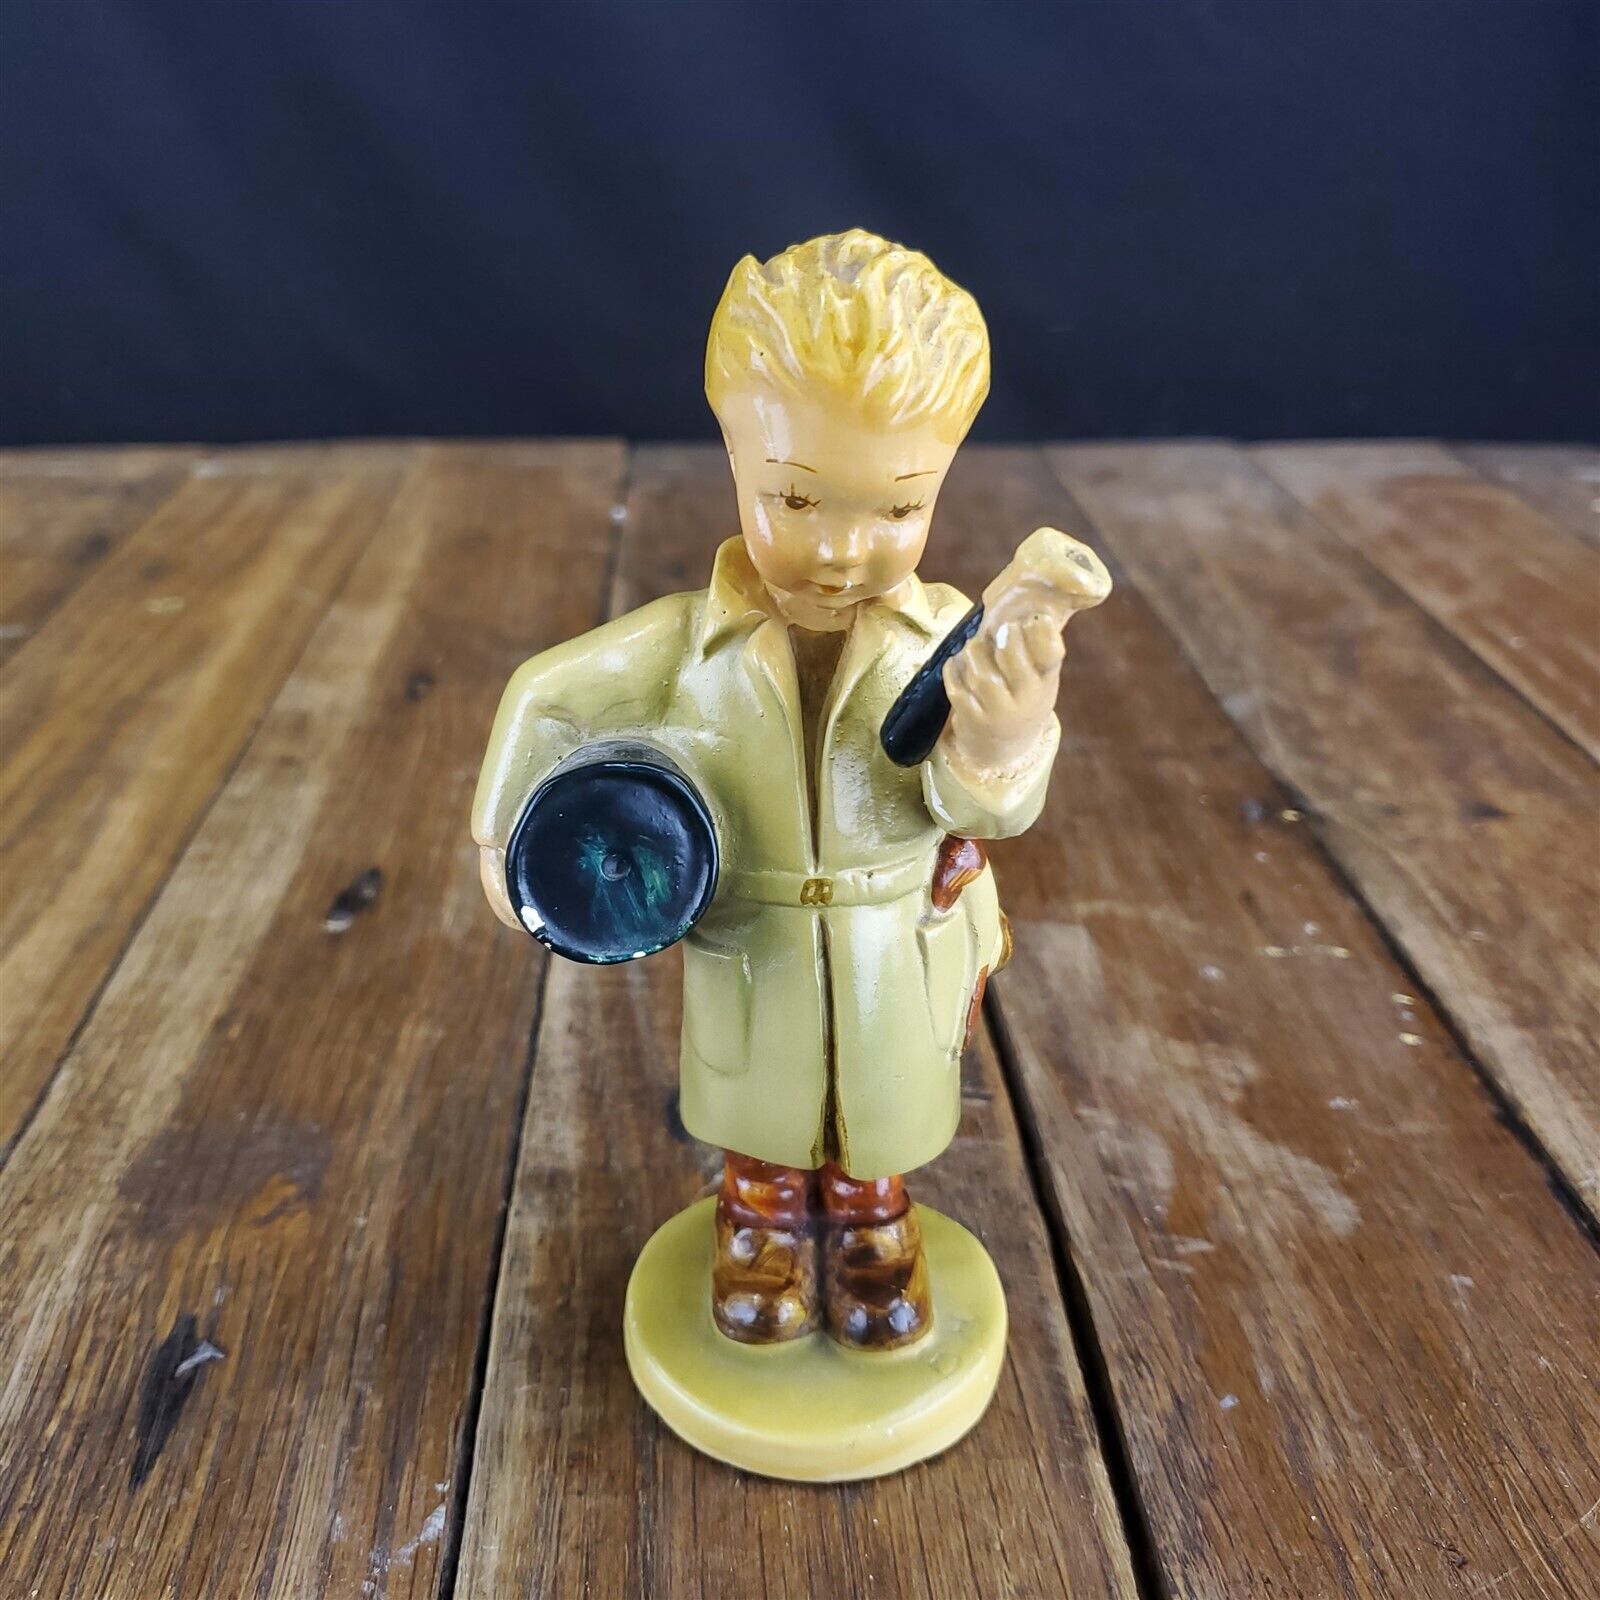 Vintage 1942 Rare Hummel Figurine - Little Chemist - Dubler No. 38 